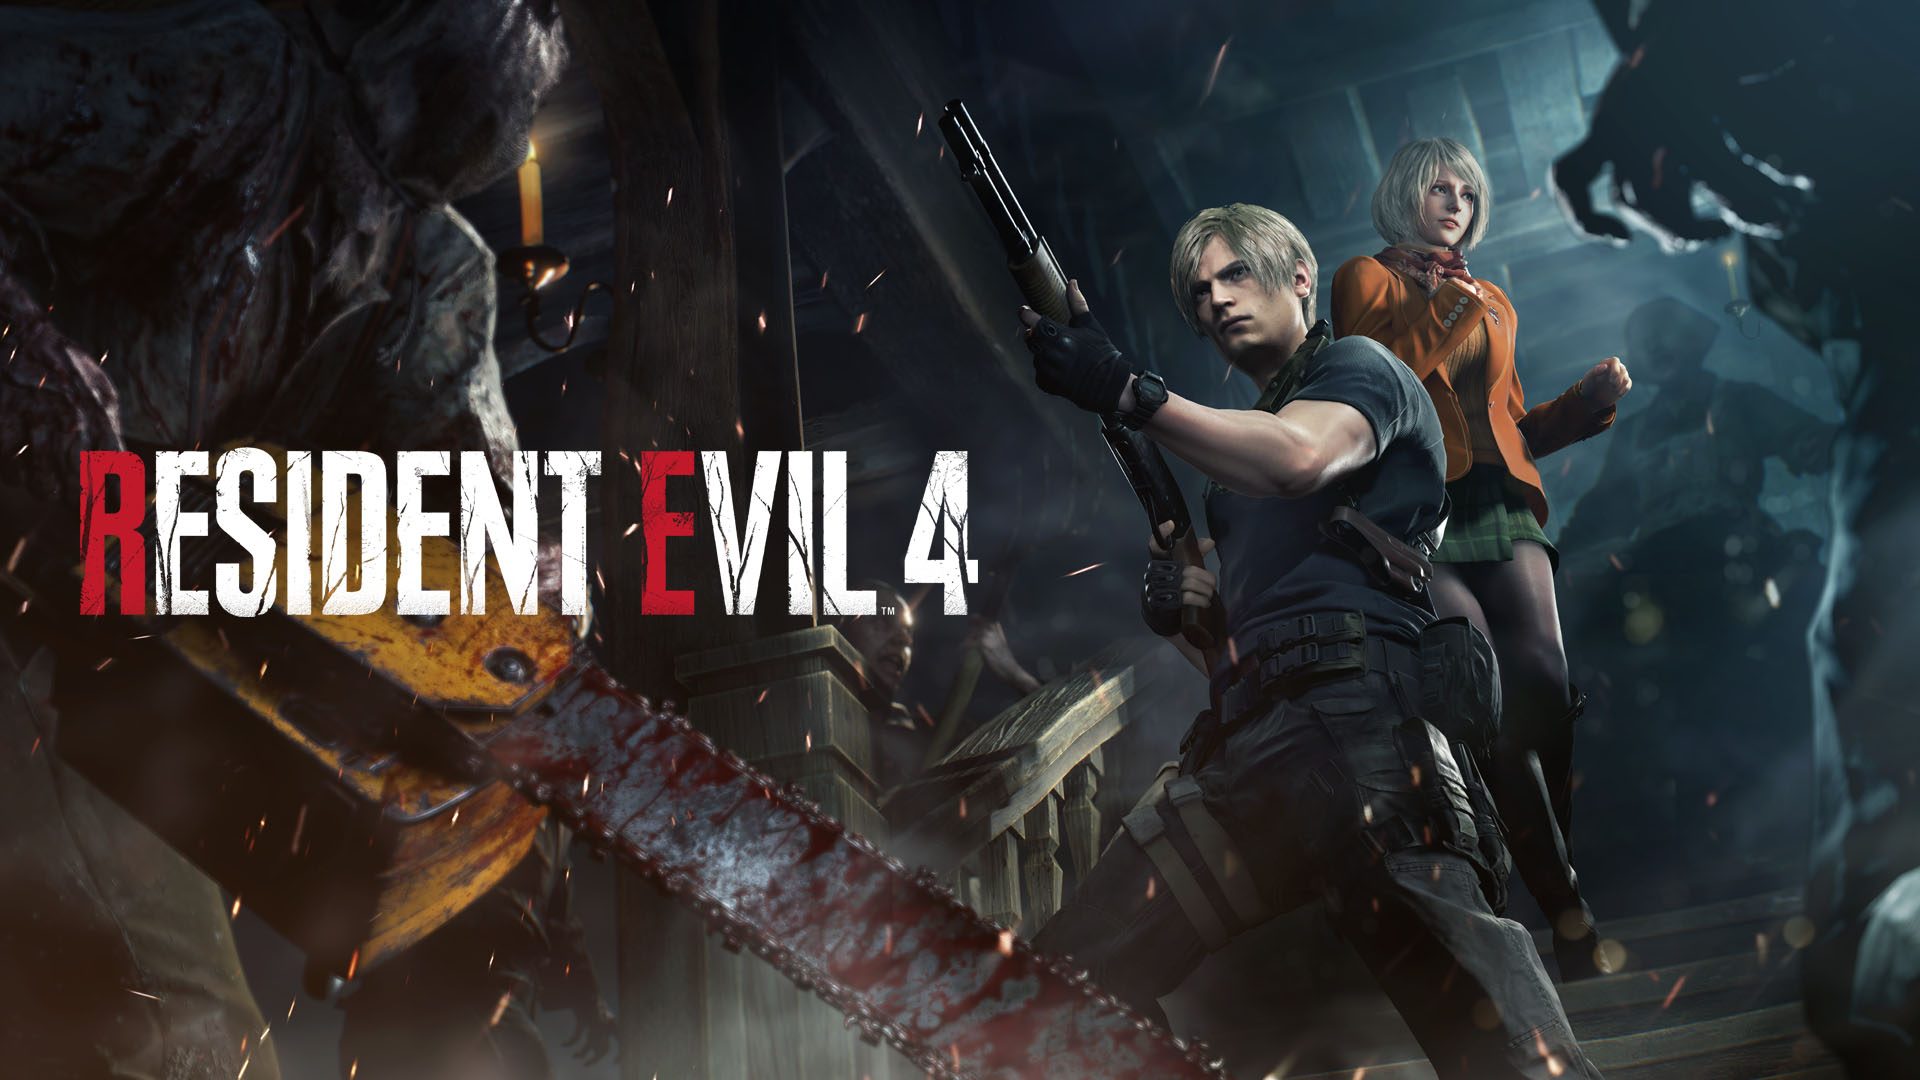 Resident Evil 4 trailer debuts new action gameplay, announces Mercenaries  mode, demo – 